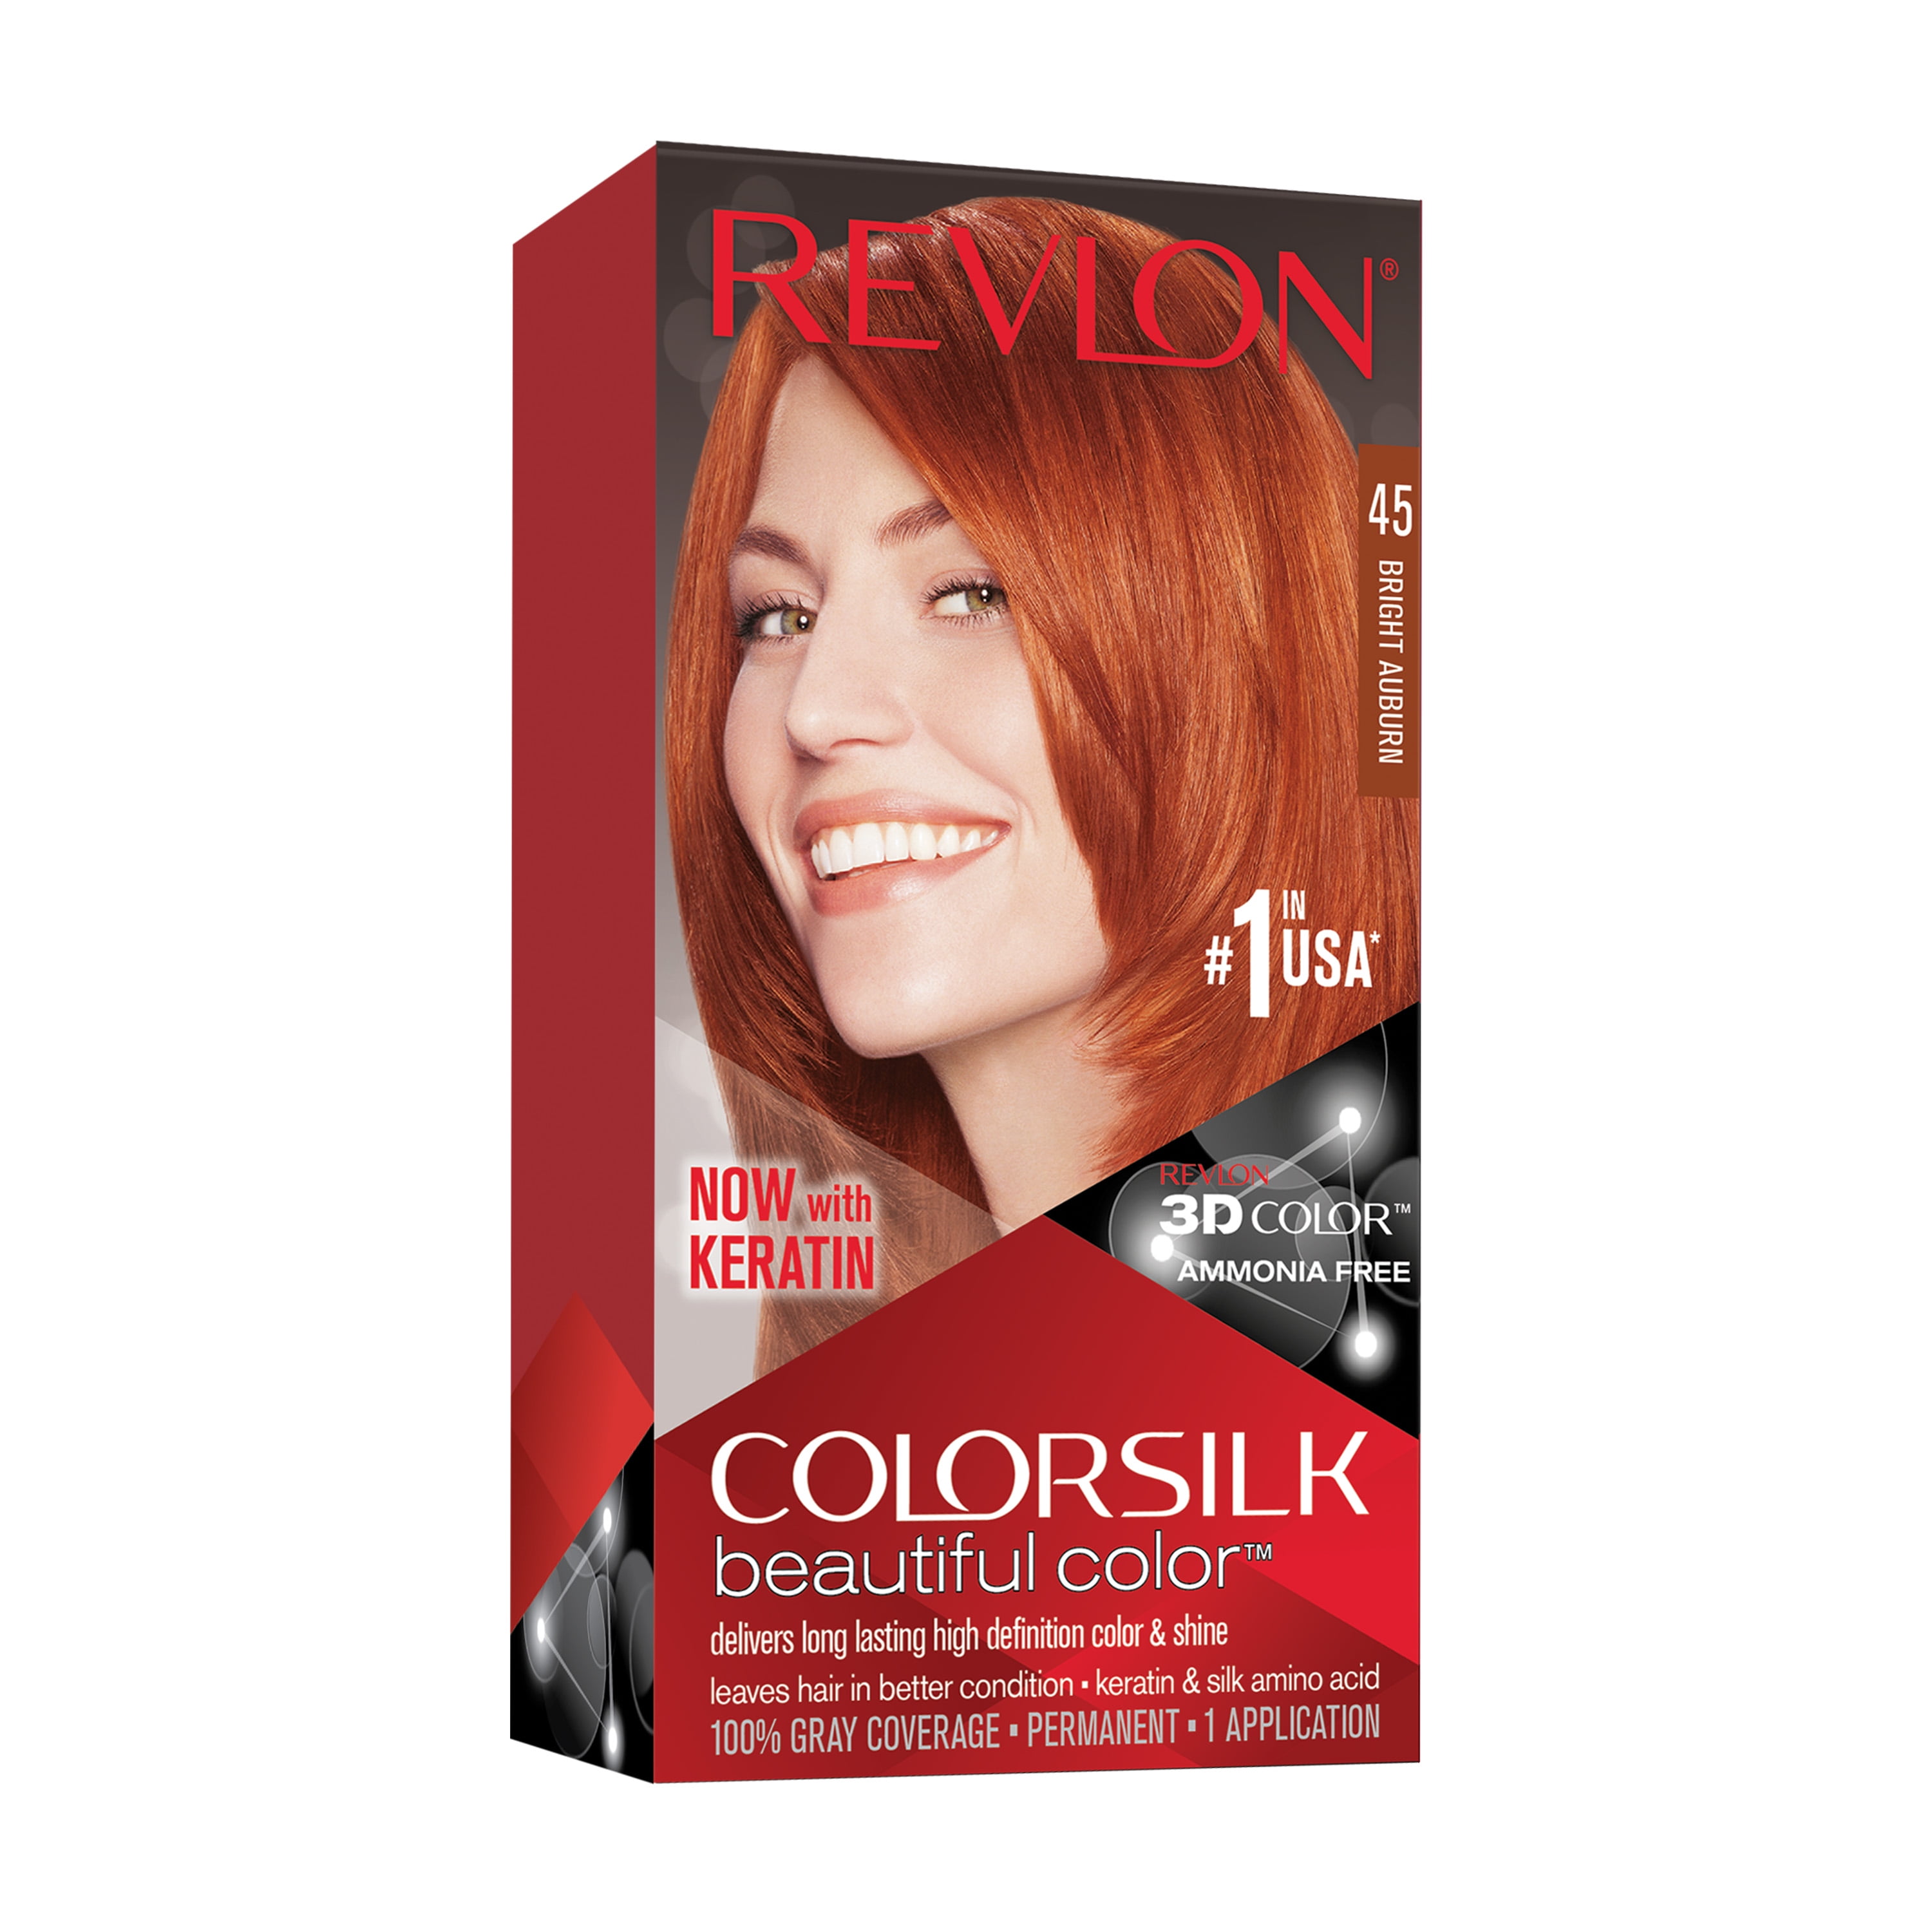 Revlon ColorSilk Beautiful Color Permanent Hair Color, 33 Dark Soft Brown,  1 Count 